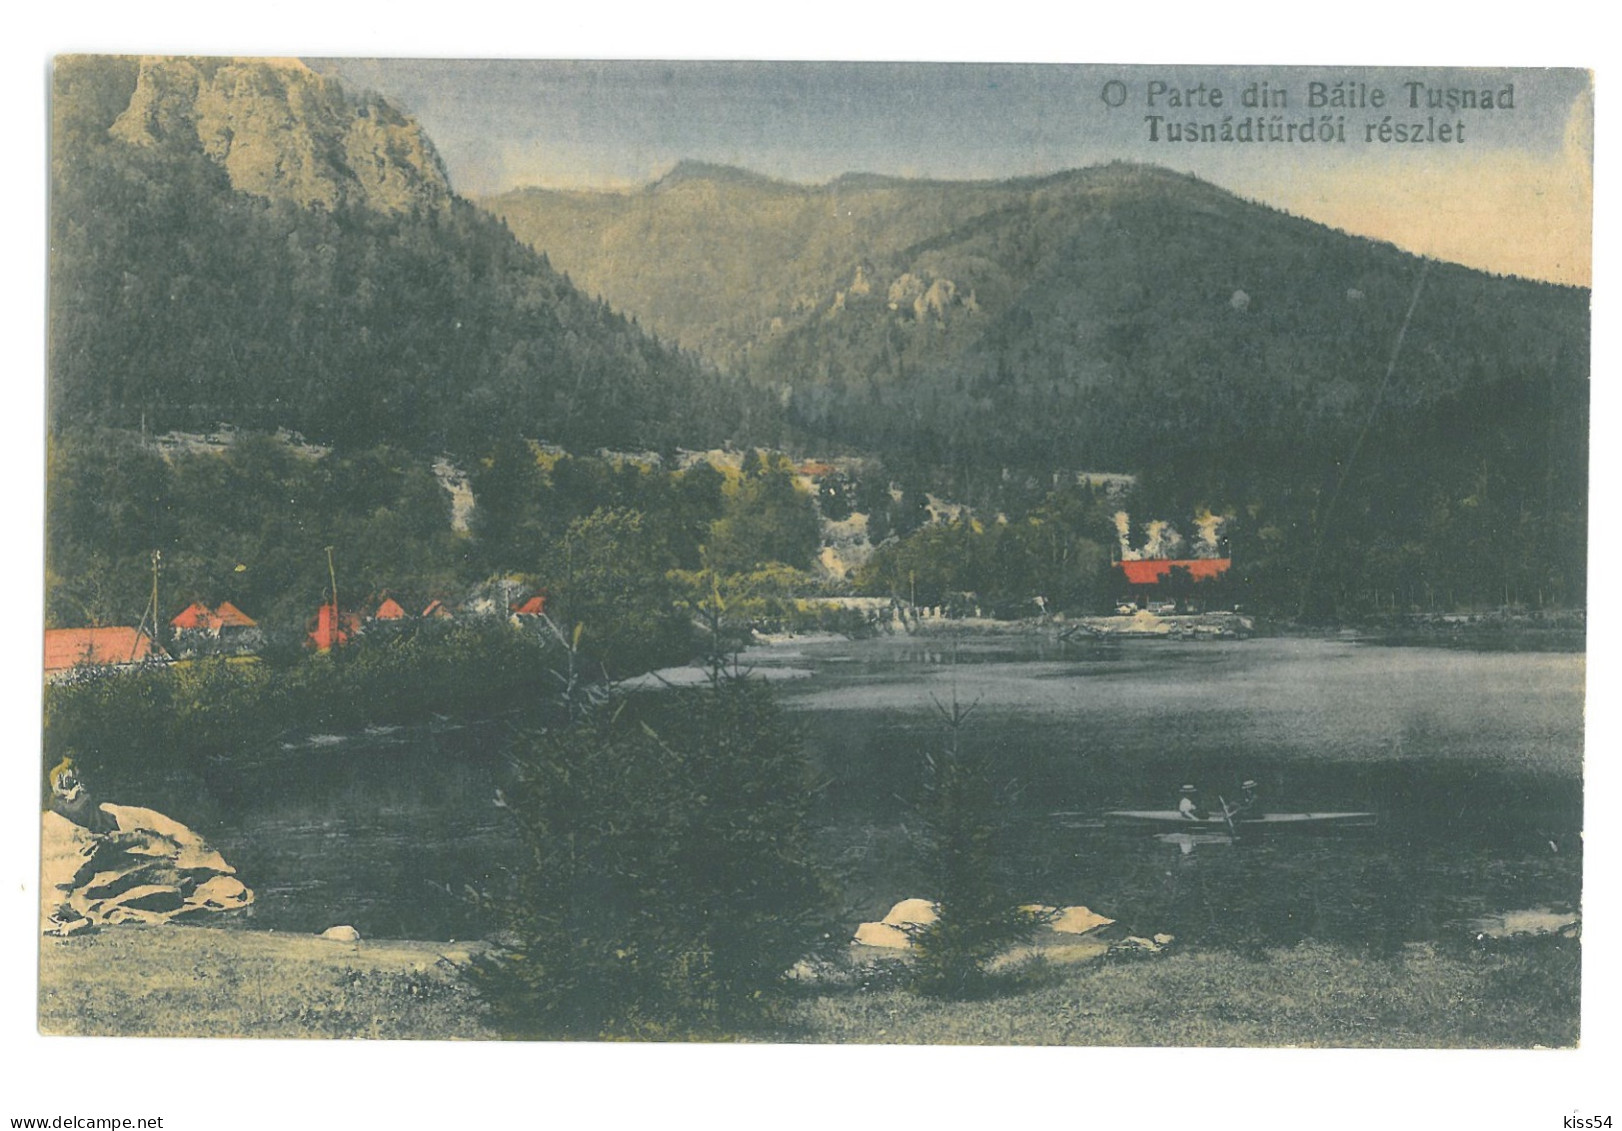 RO 82 - 18410 TUSNAD, Harghita, Panorama, Romania - Old Postcard - Unused - Roumanie